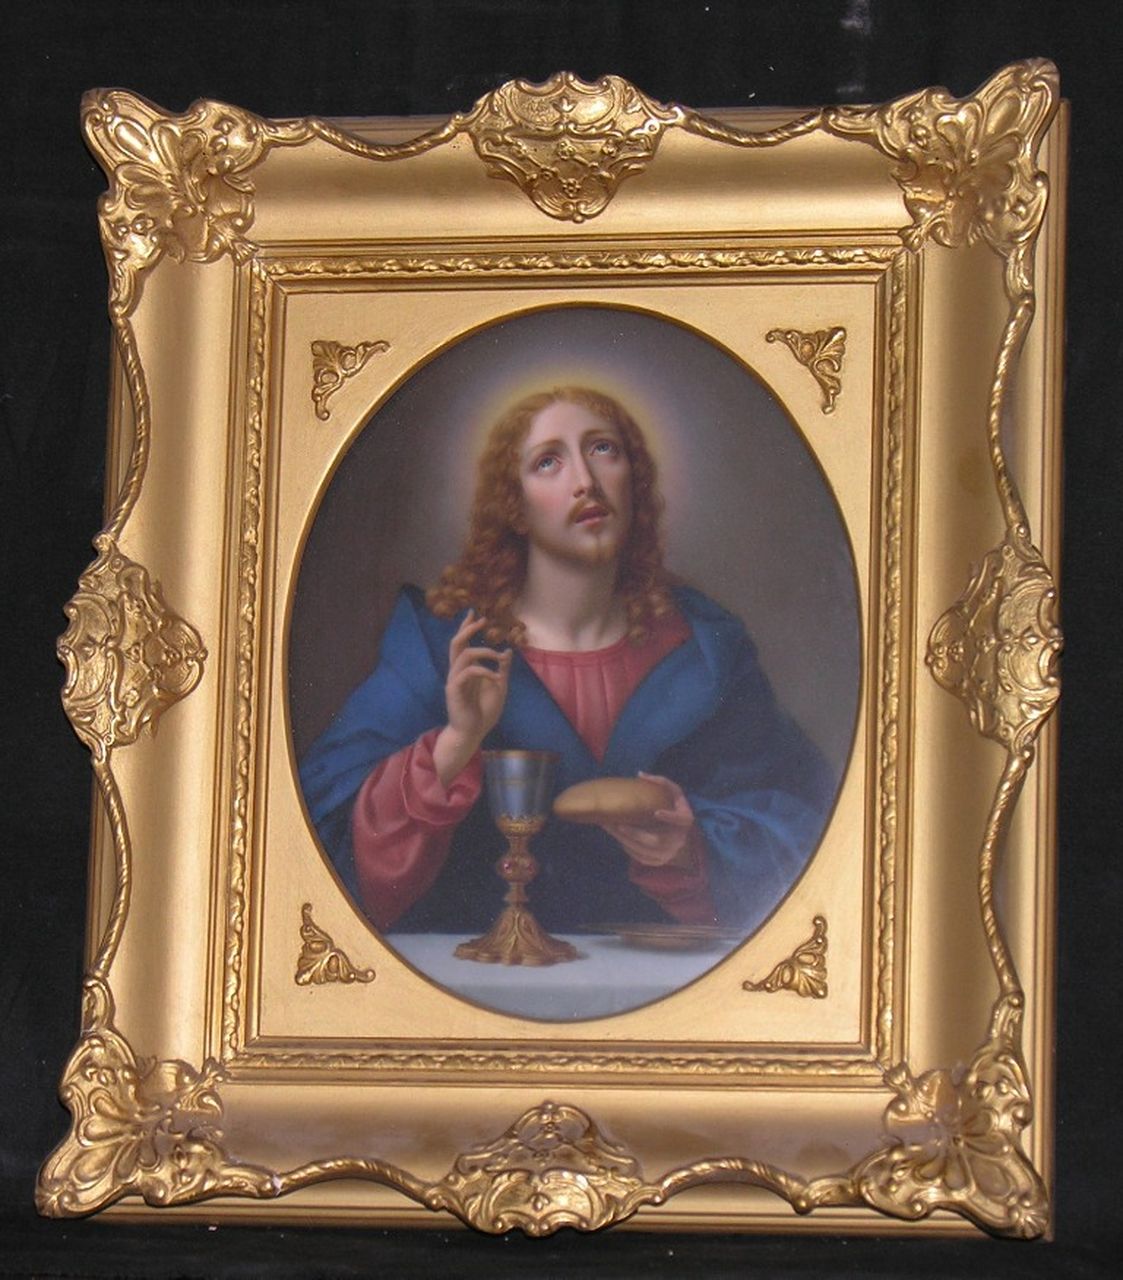 Christus, Brot und Wein segnend, Cristo benedicente pane e vino (dipinto) di Ludwig Sturm - manifattura di Dresda (sec. XX)